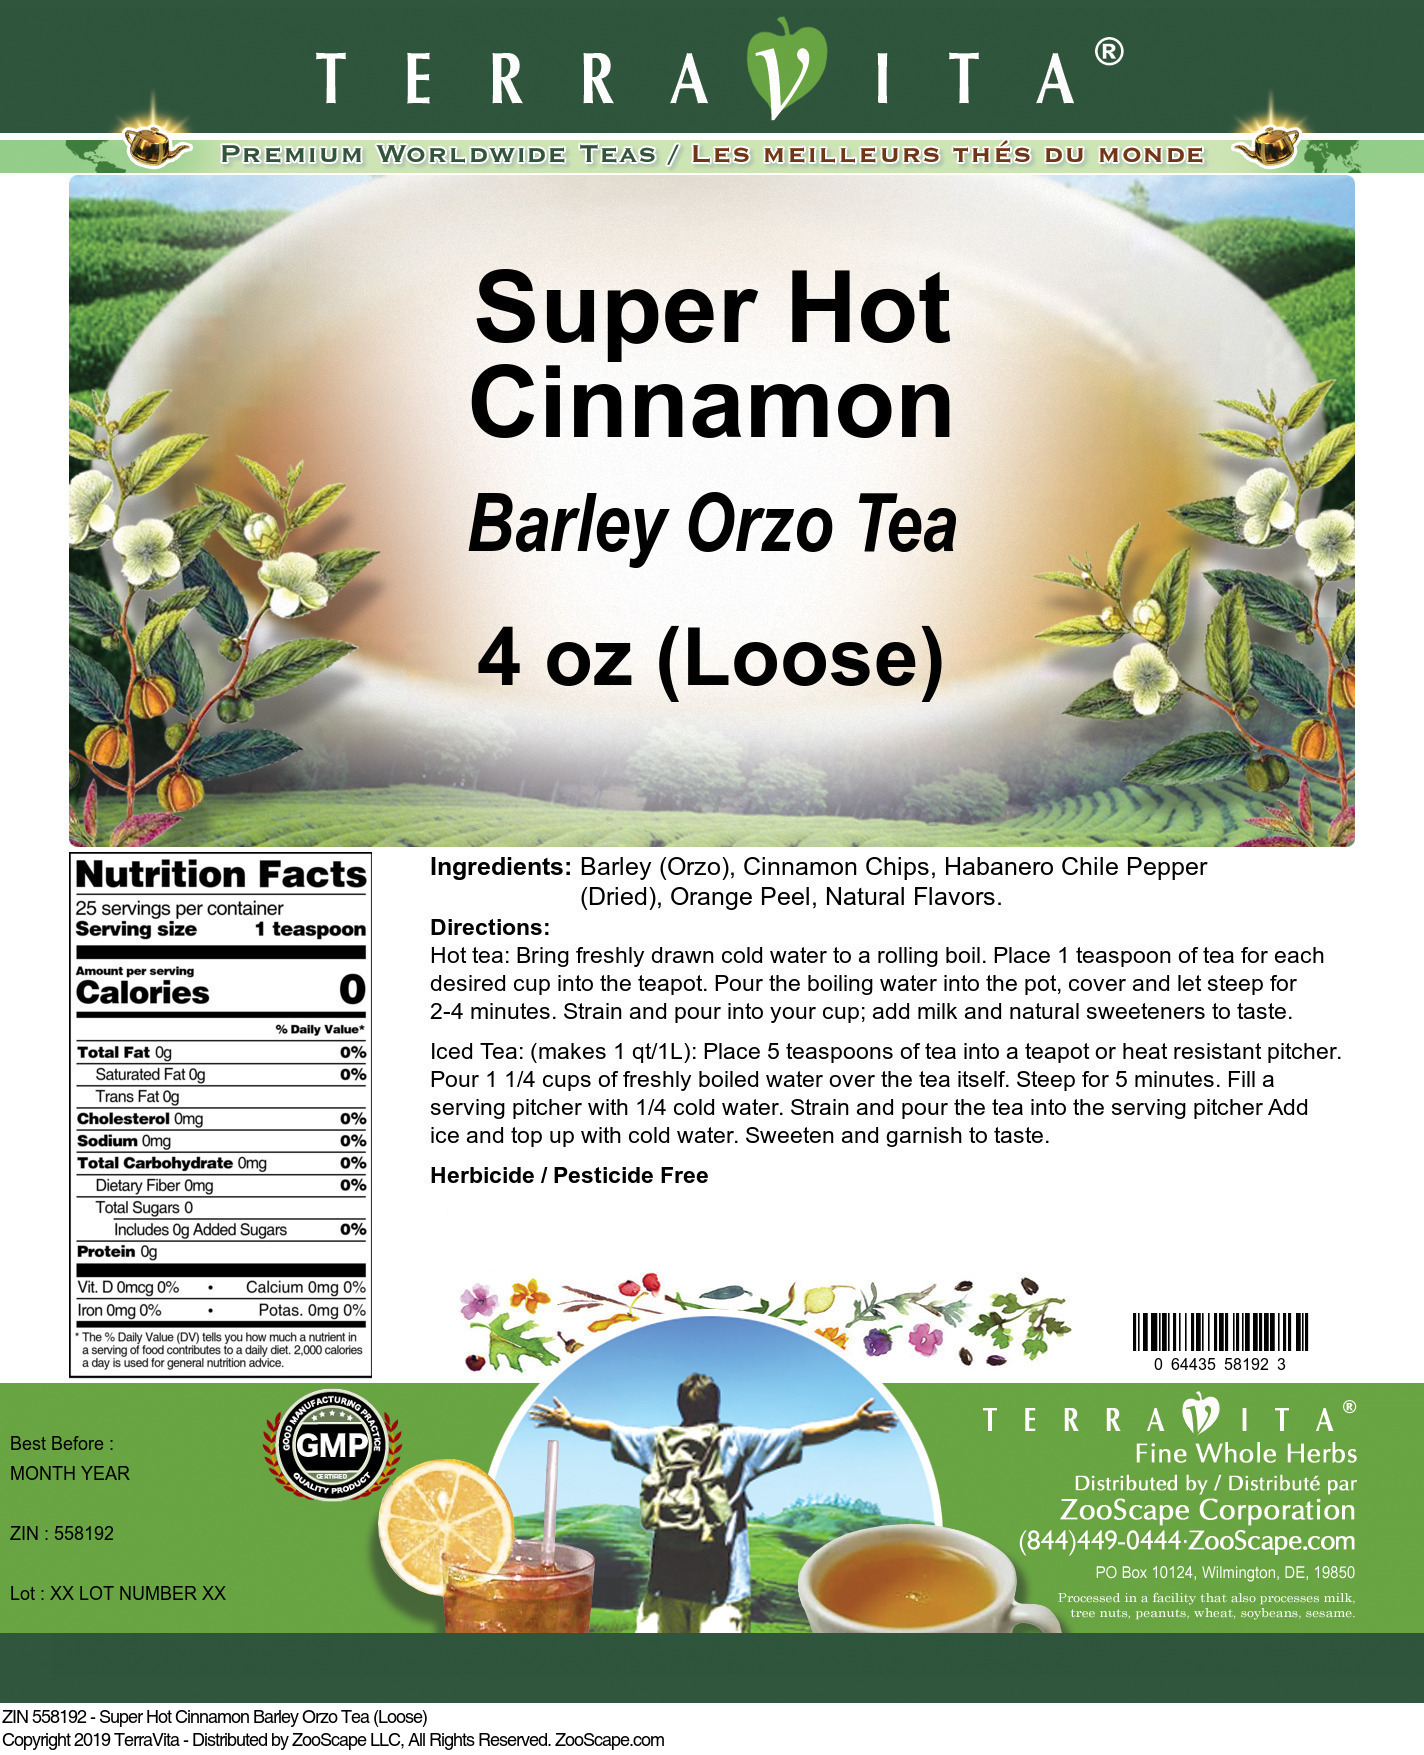 Super Hot Cinnamon Barley Orzo Tea (Loose) - Label